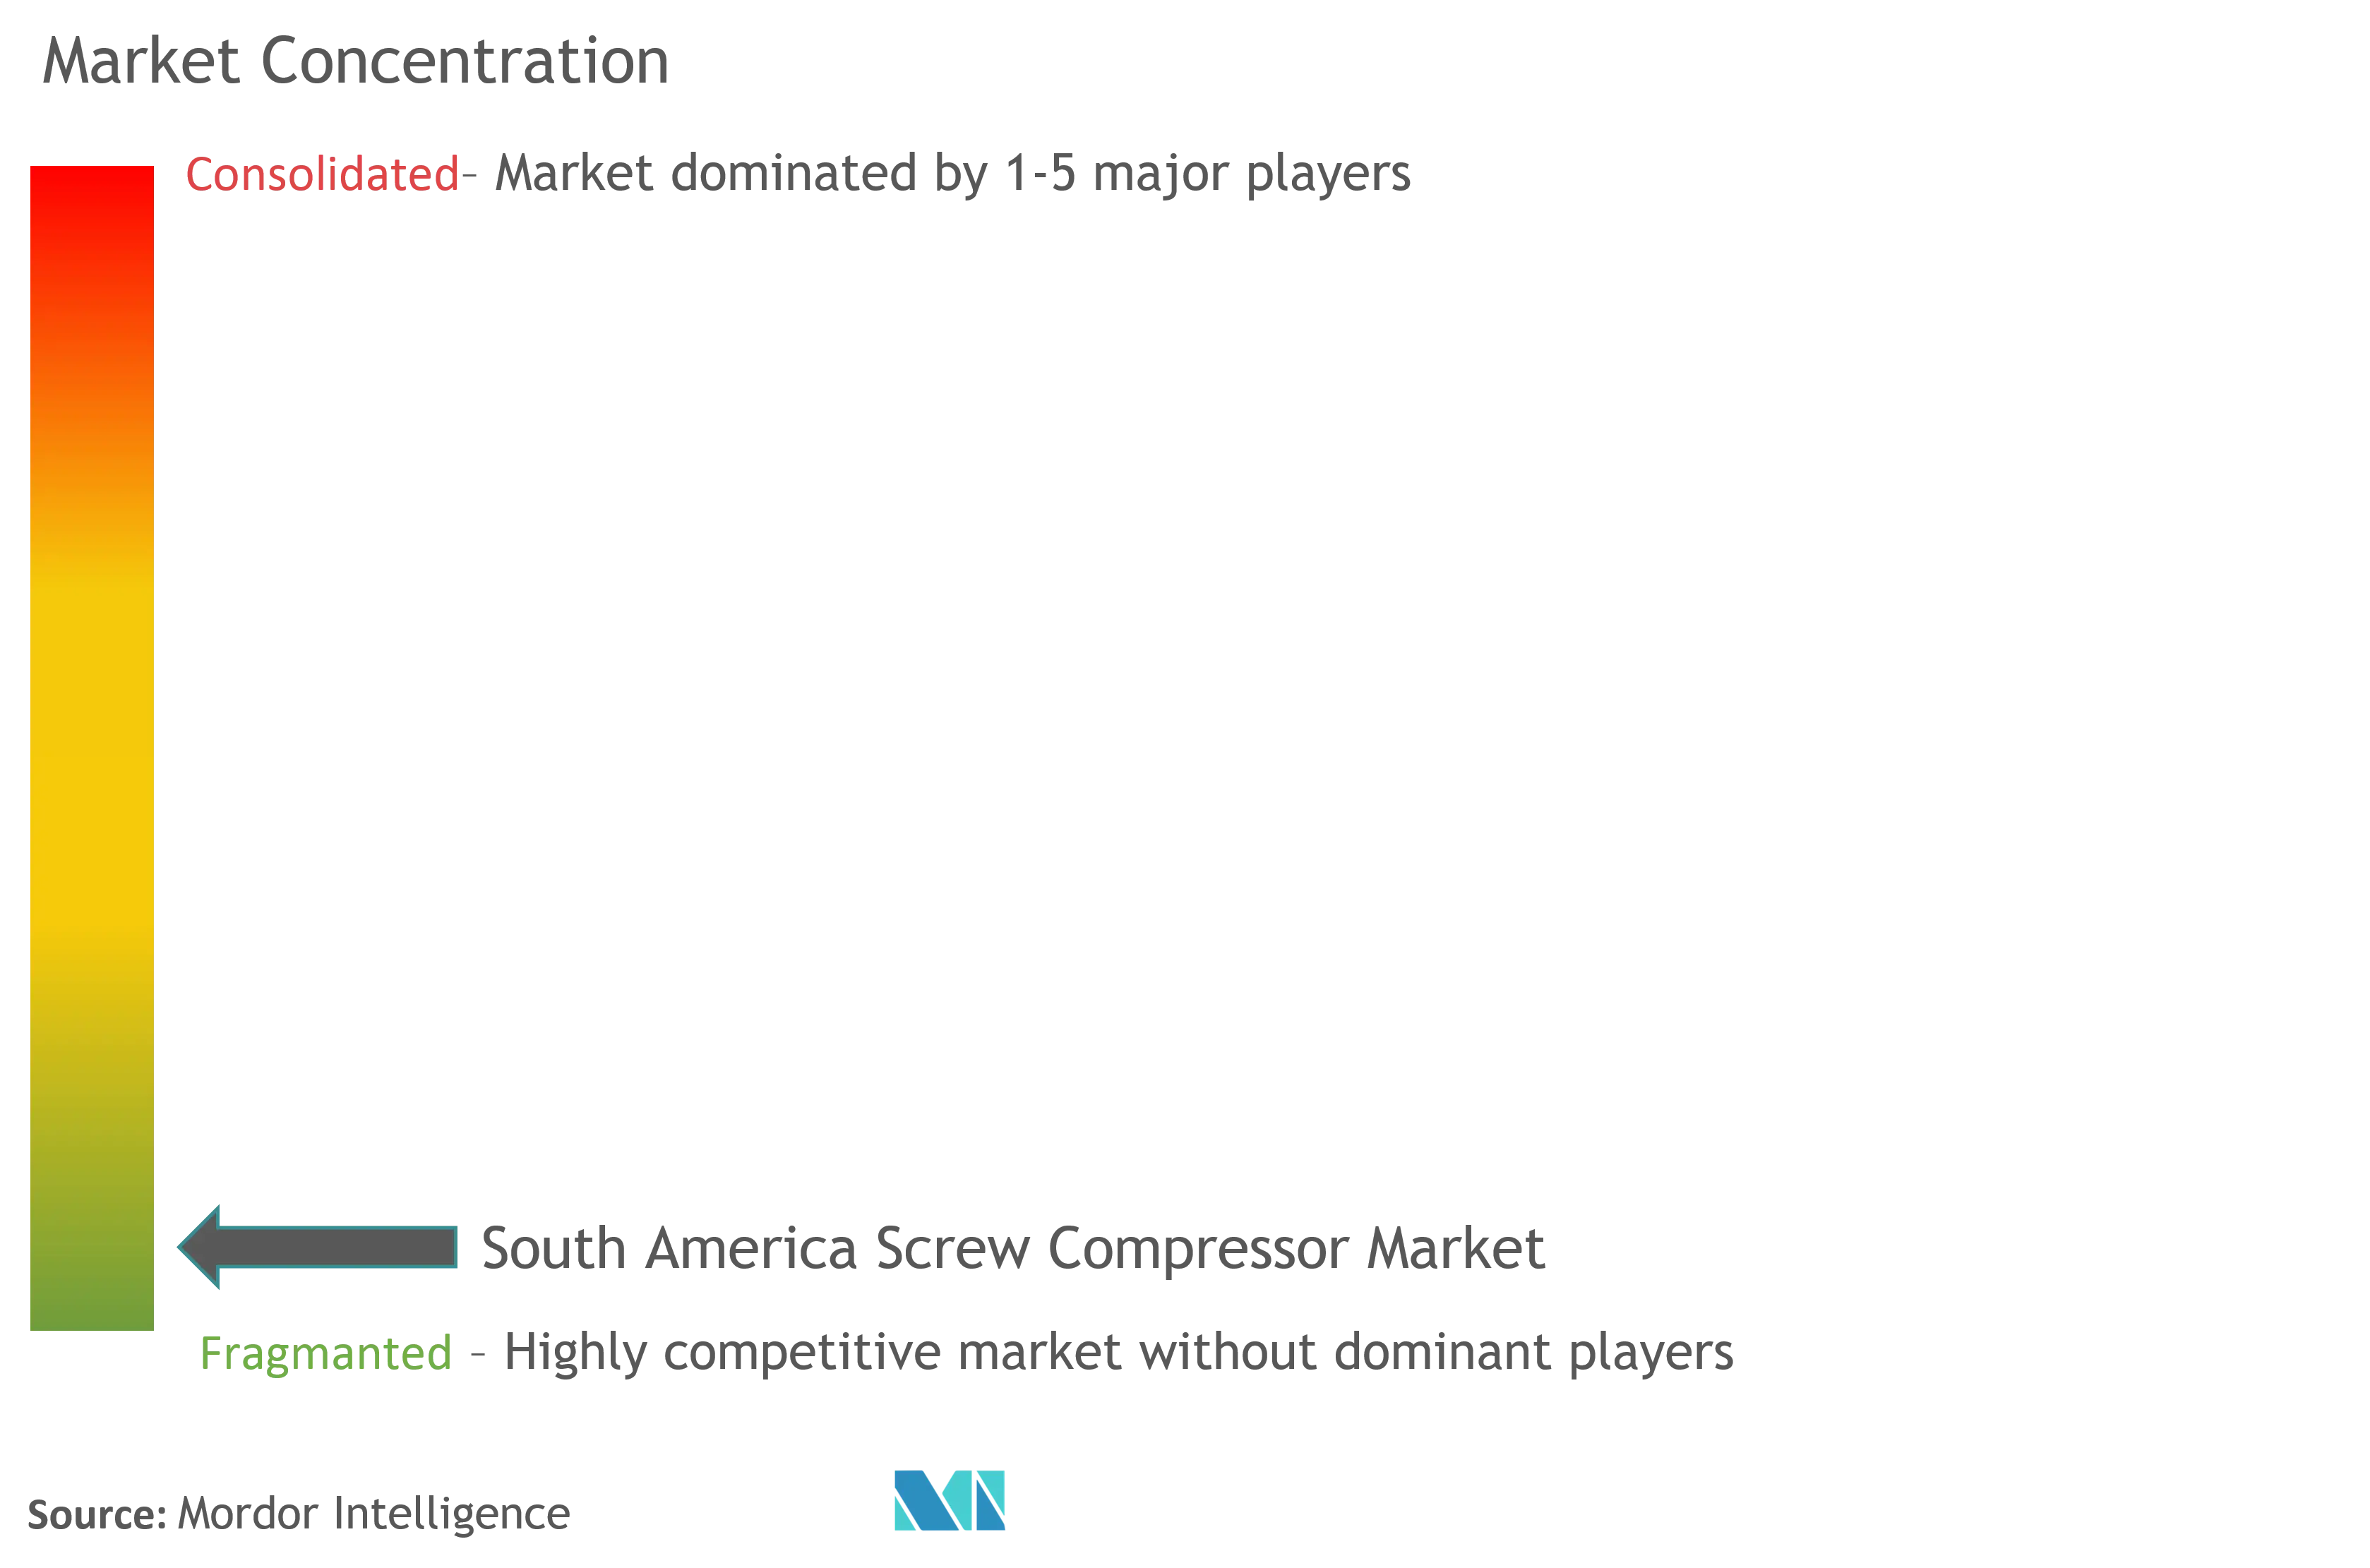 South America Screw Compressor Market Concentration